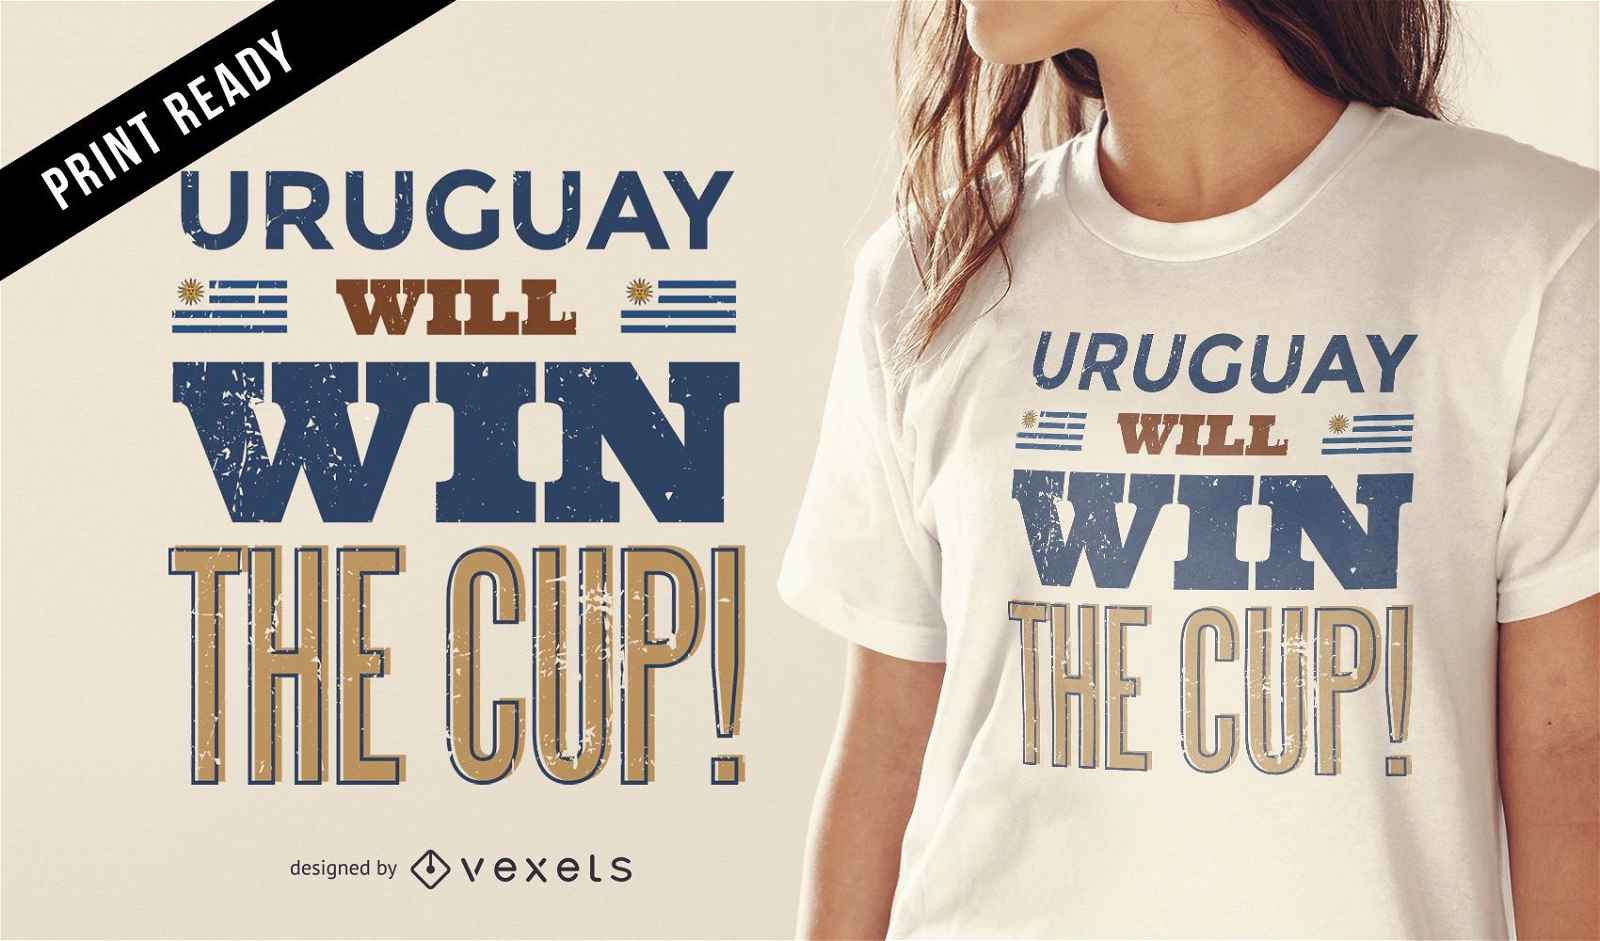 Uruguay will win t-shirt design